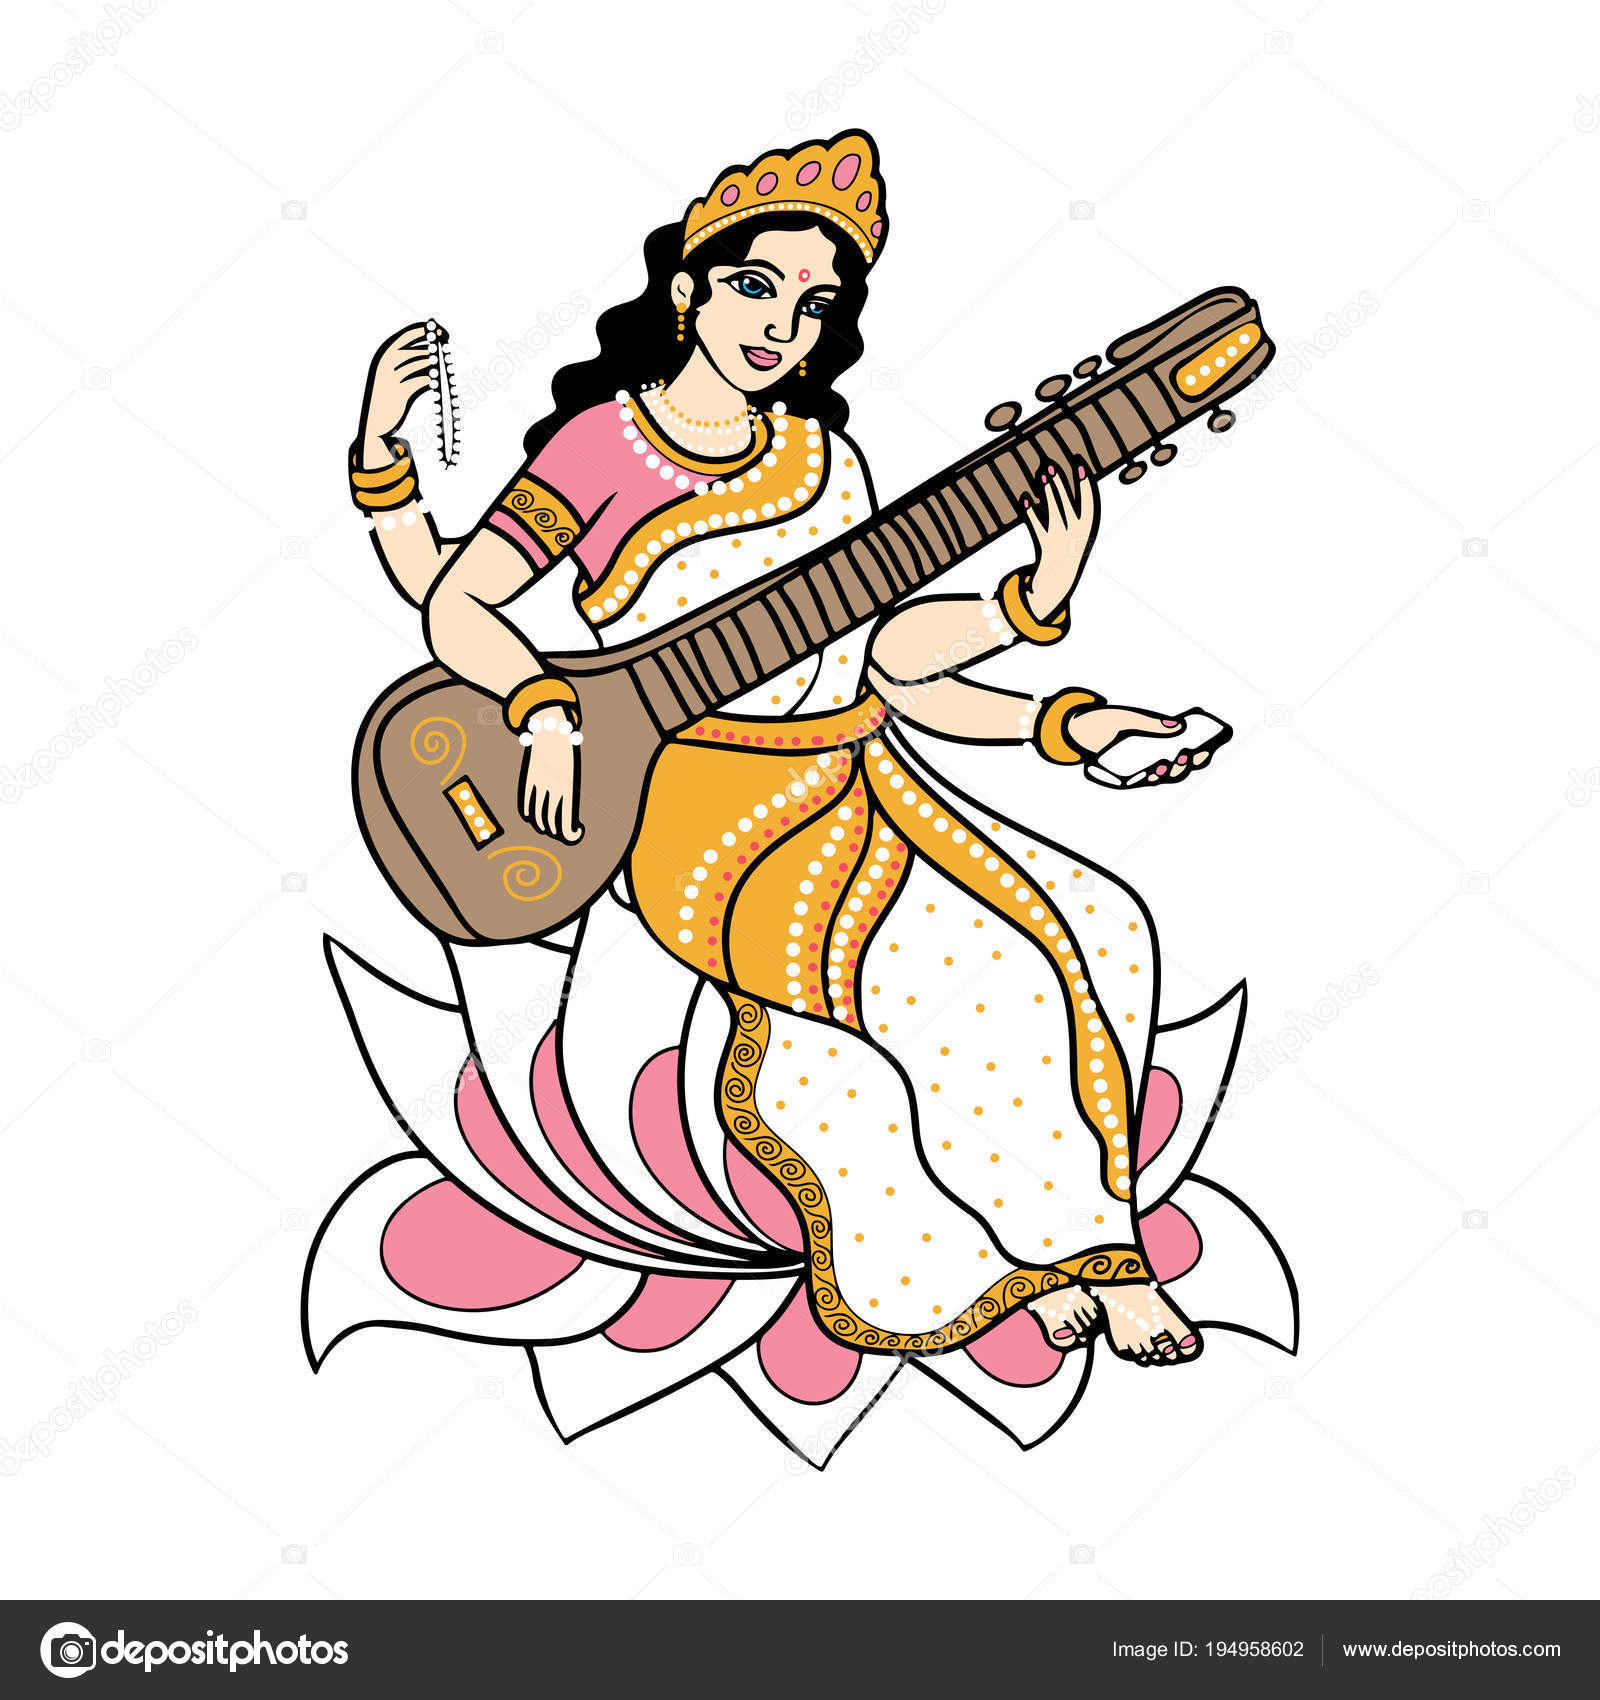 Pictures Saraswati Cartoon Image Cartoon Vector Hindu Goddess Saraswati Sitting Lotus White Sari Greeting Stock Vector C Lashmipics 194958602